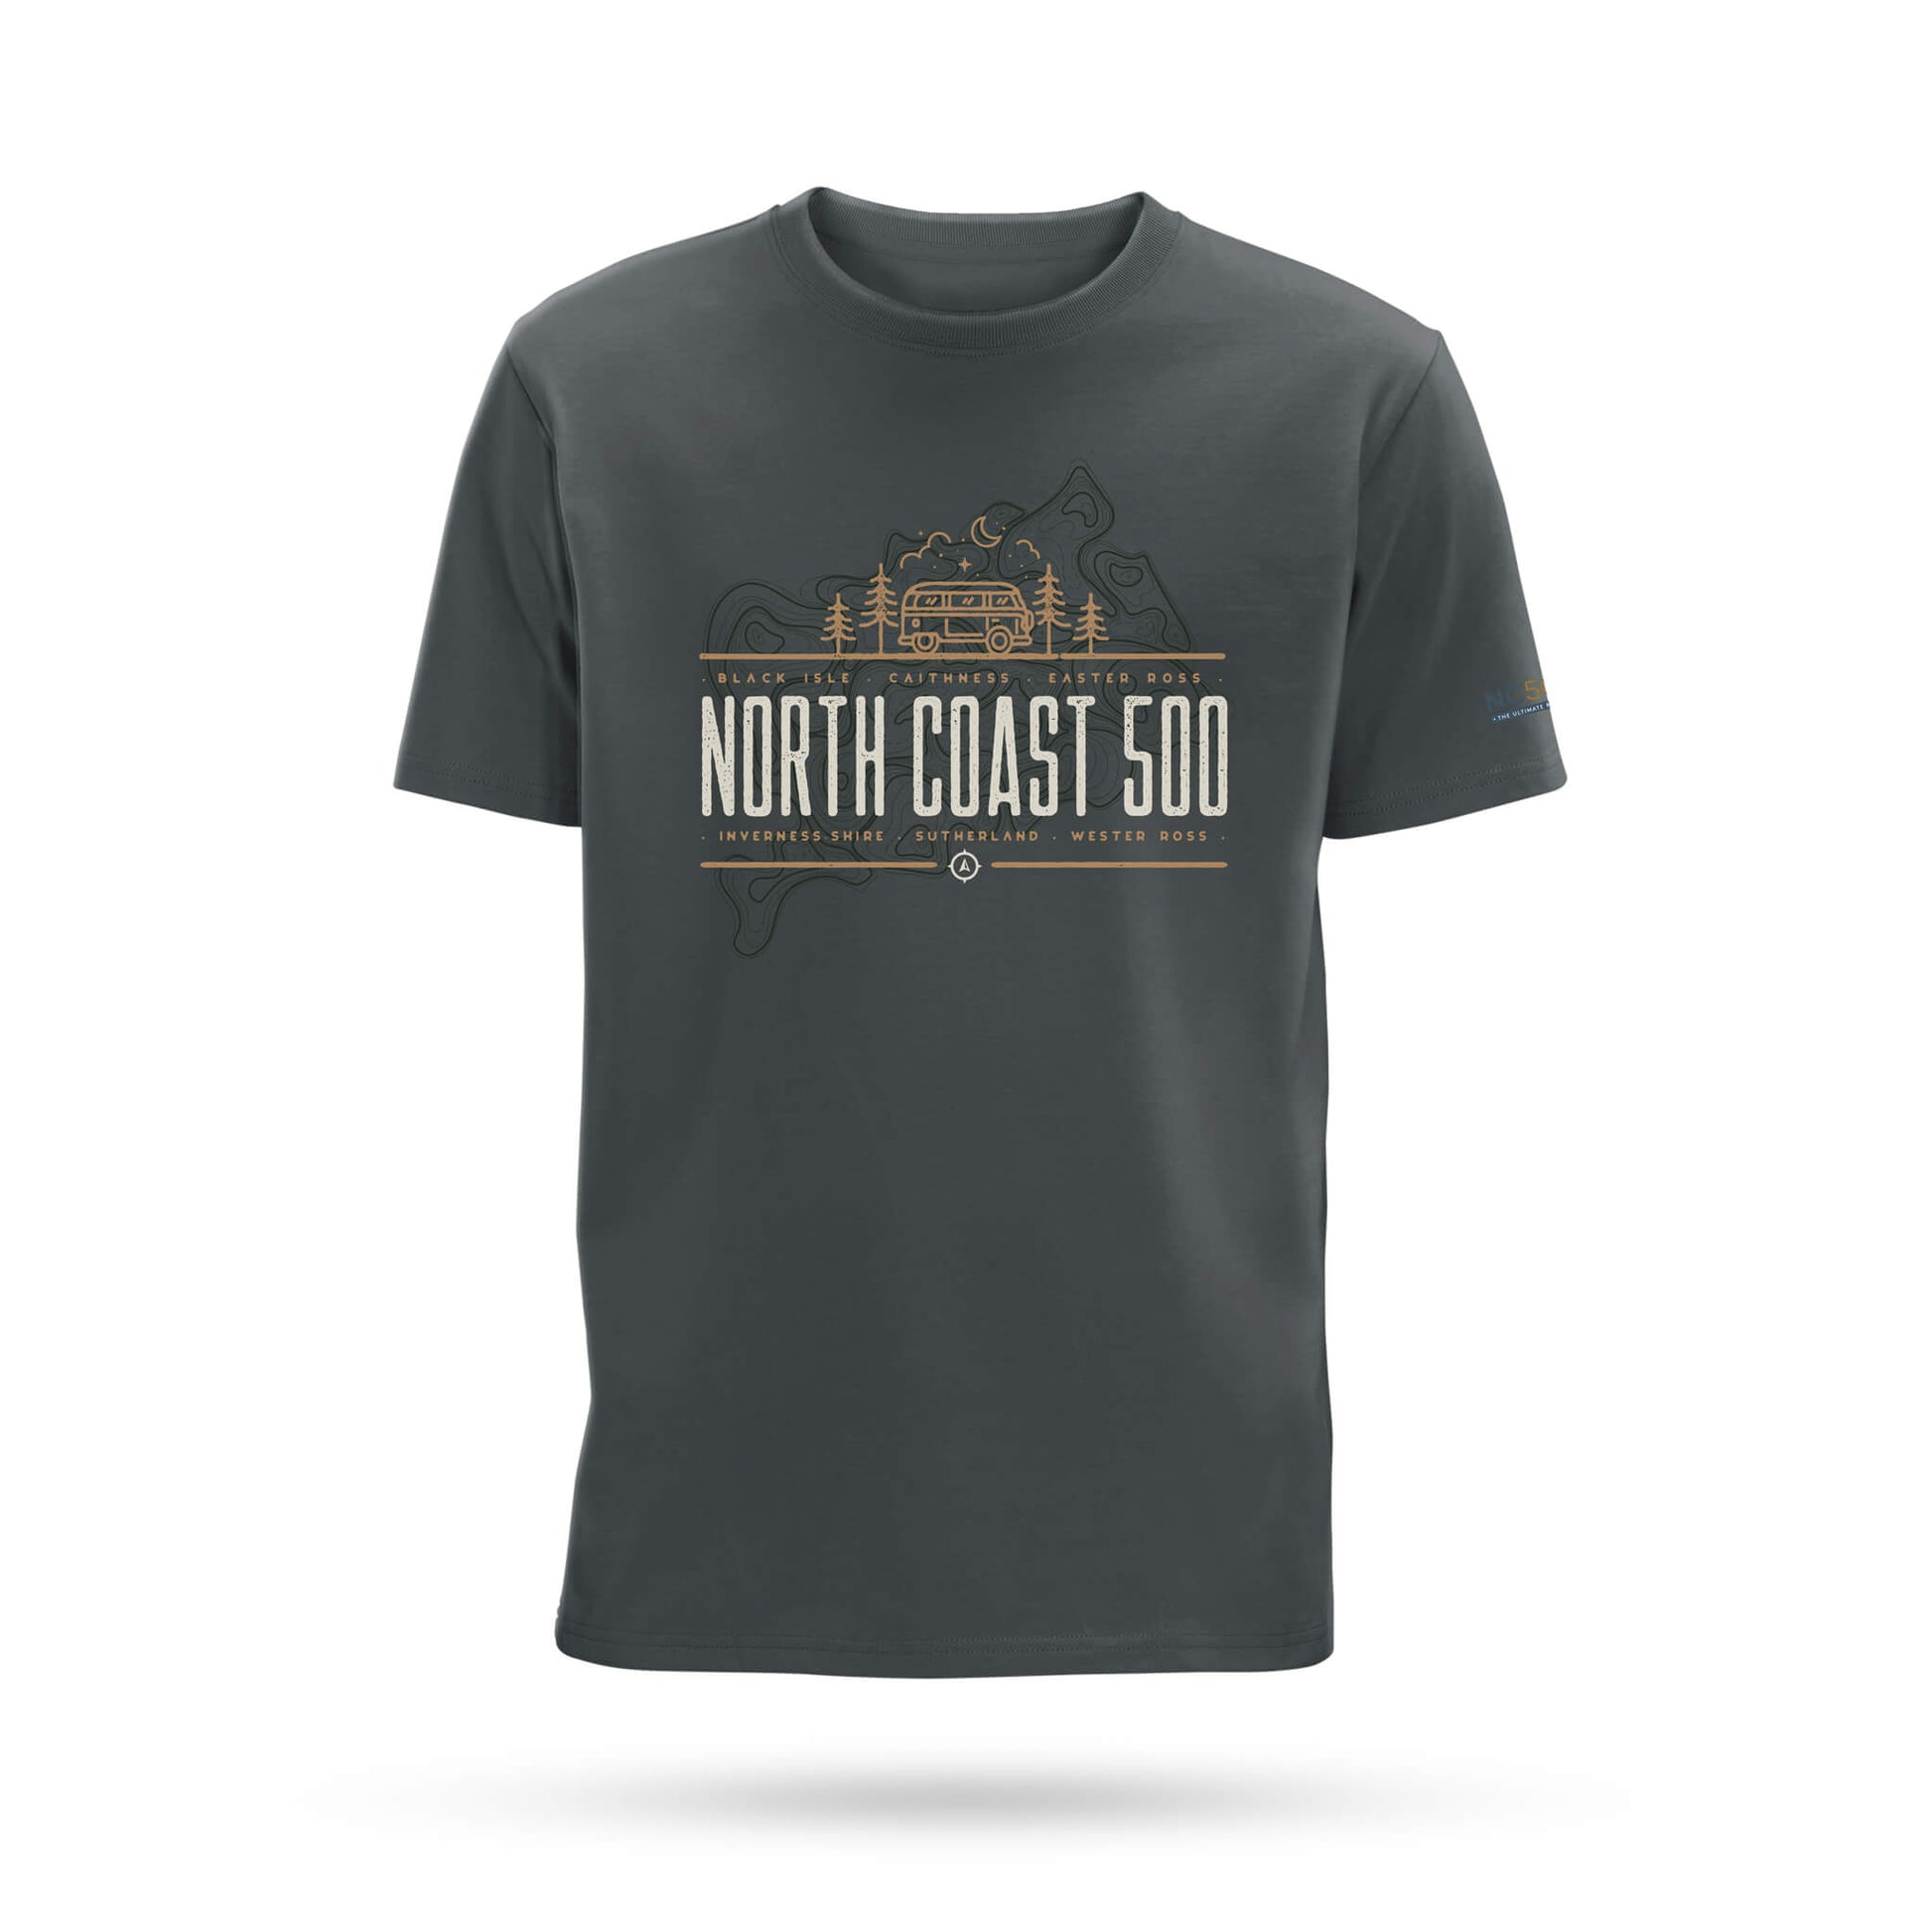 North Coast 500 camper t-shirt - Anthracite